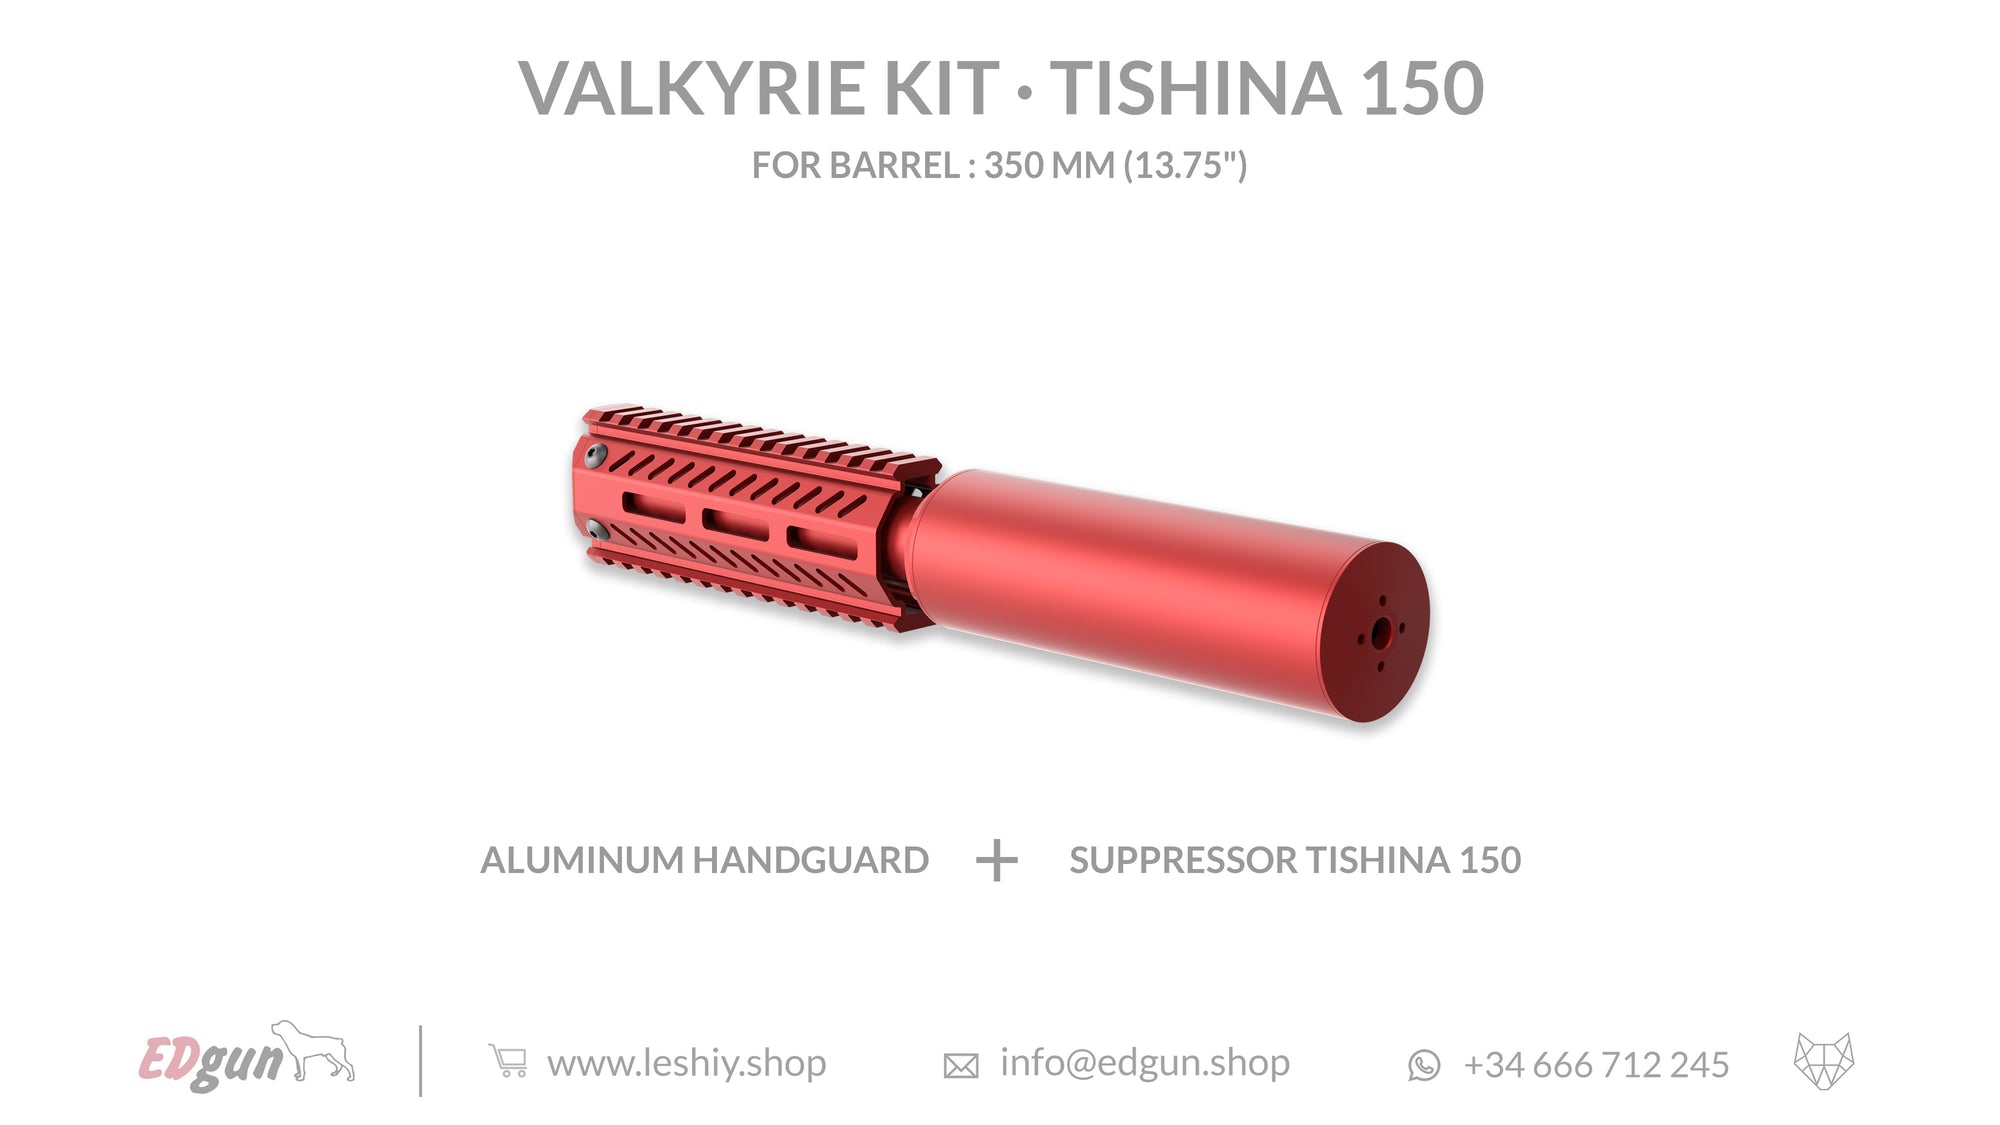 Valkyrie Kit Tishina 150 for barrel 350mm (13.75¨)